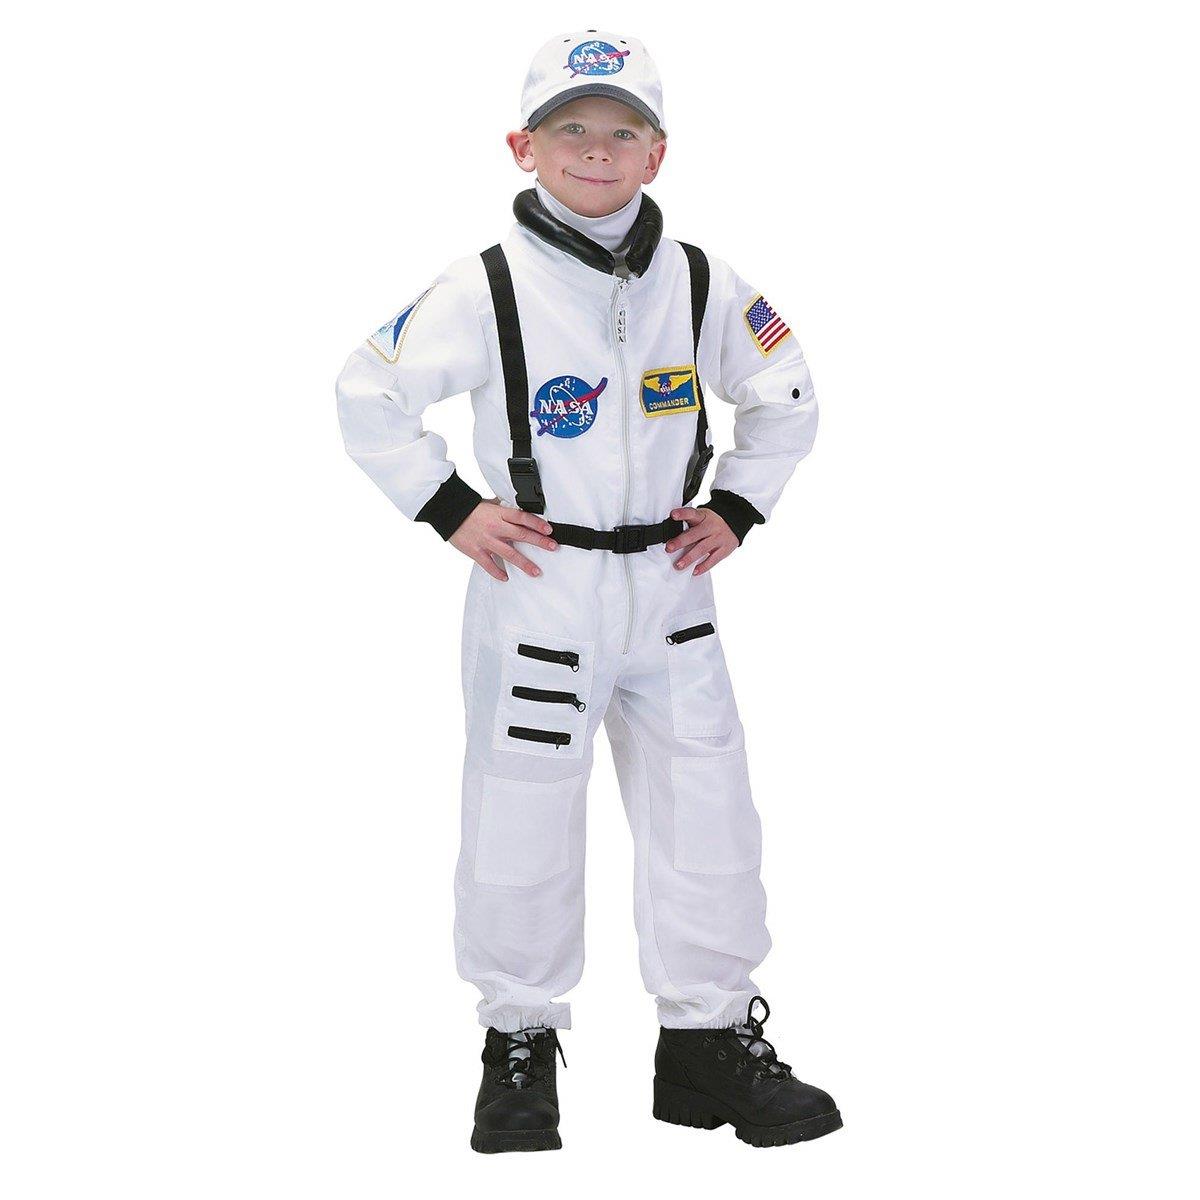 271555 Nasa Astronaut White Deluxe Child Costume - Medium